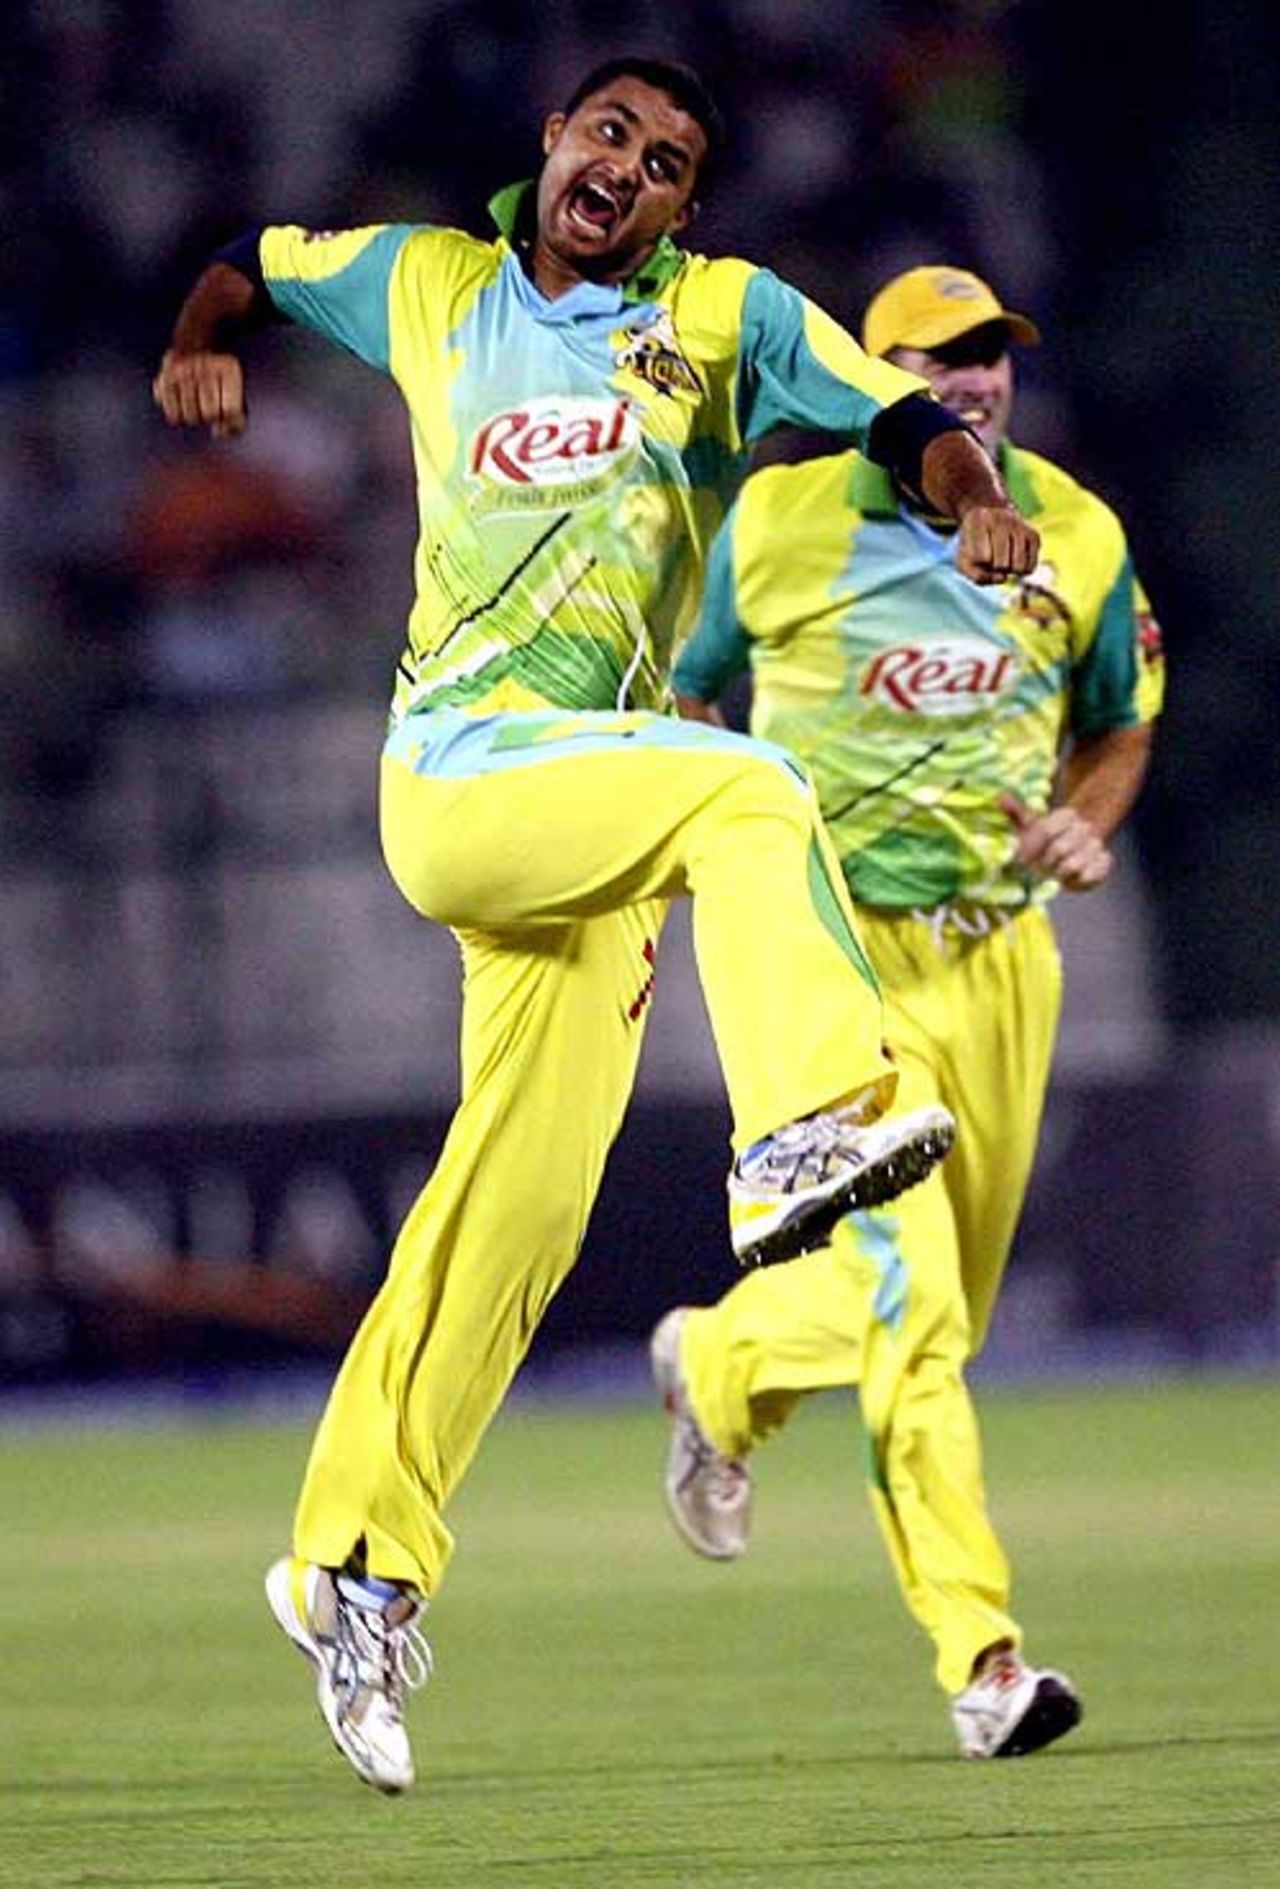 Chandigarh's Ishan Malhotra celebrates his second wicket against Hyderabad, Chandigarh Lions v Hyderabad Heroes, Indian Cricket League, Hyderabad, March 29, 2008